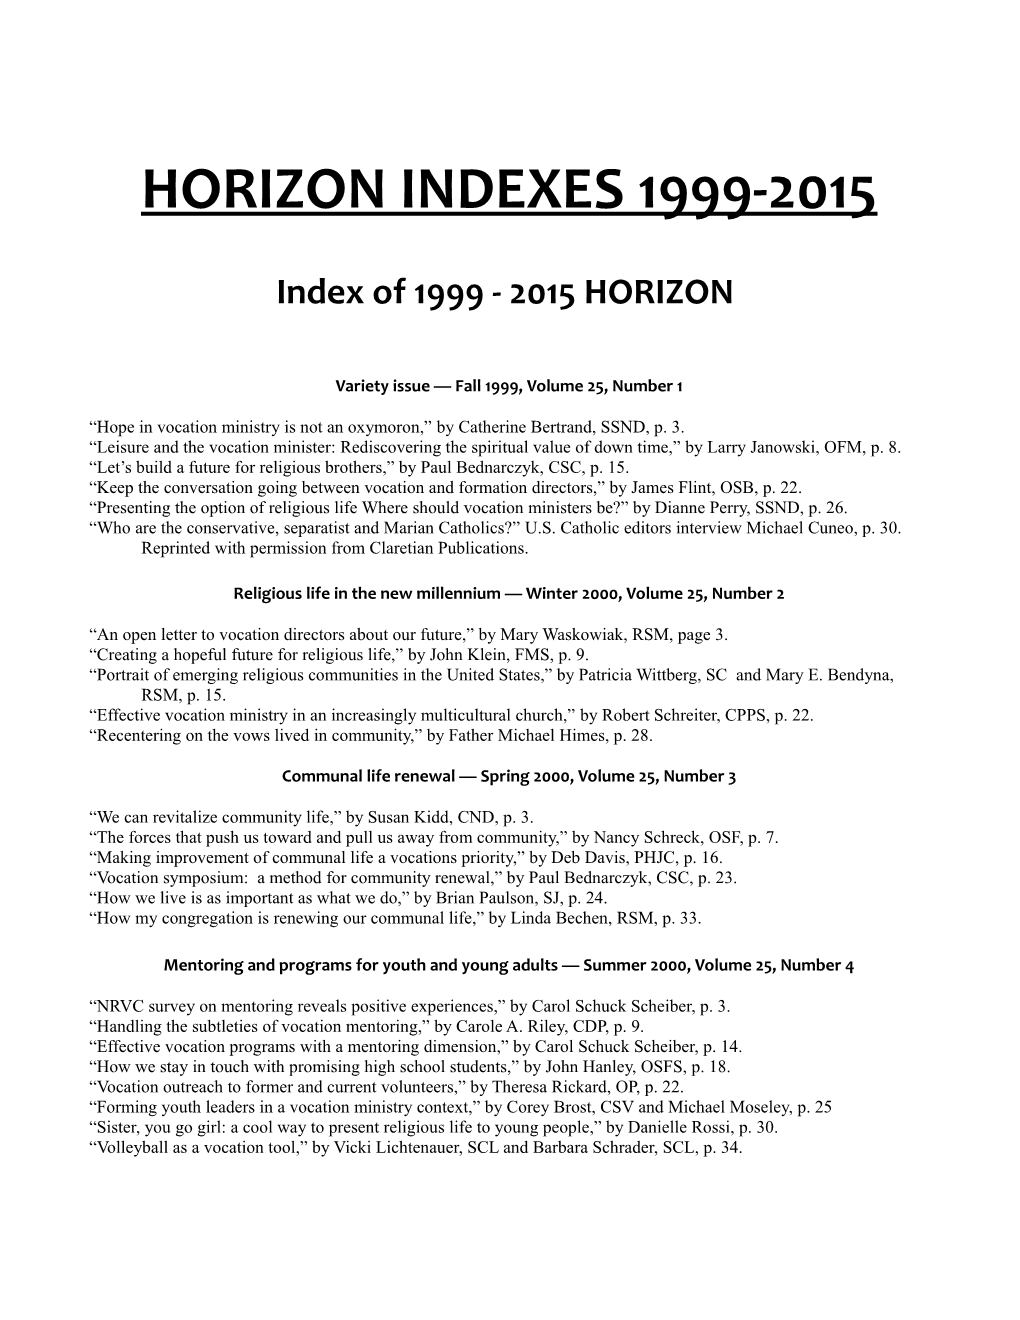 Index of 1999 - 2000 HORIZON